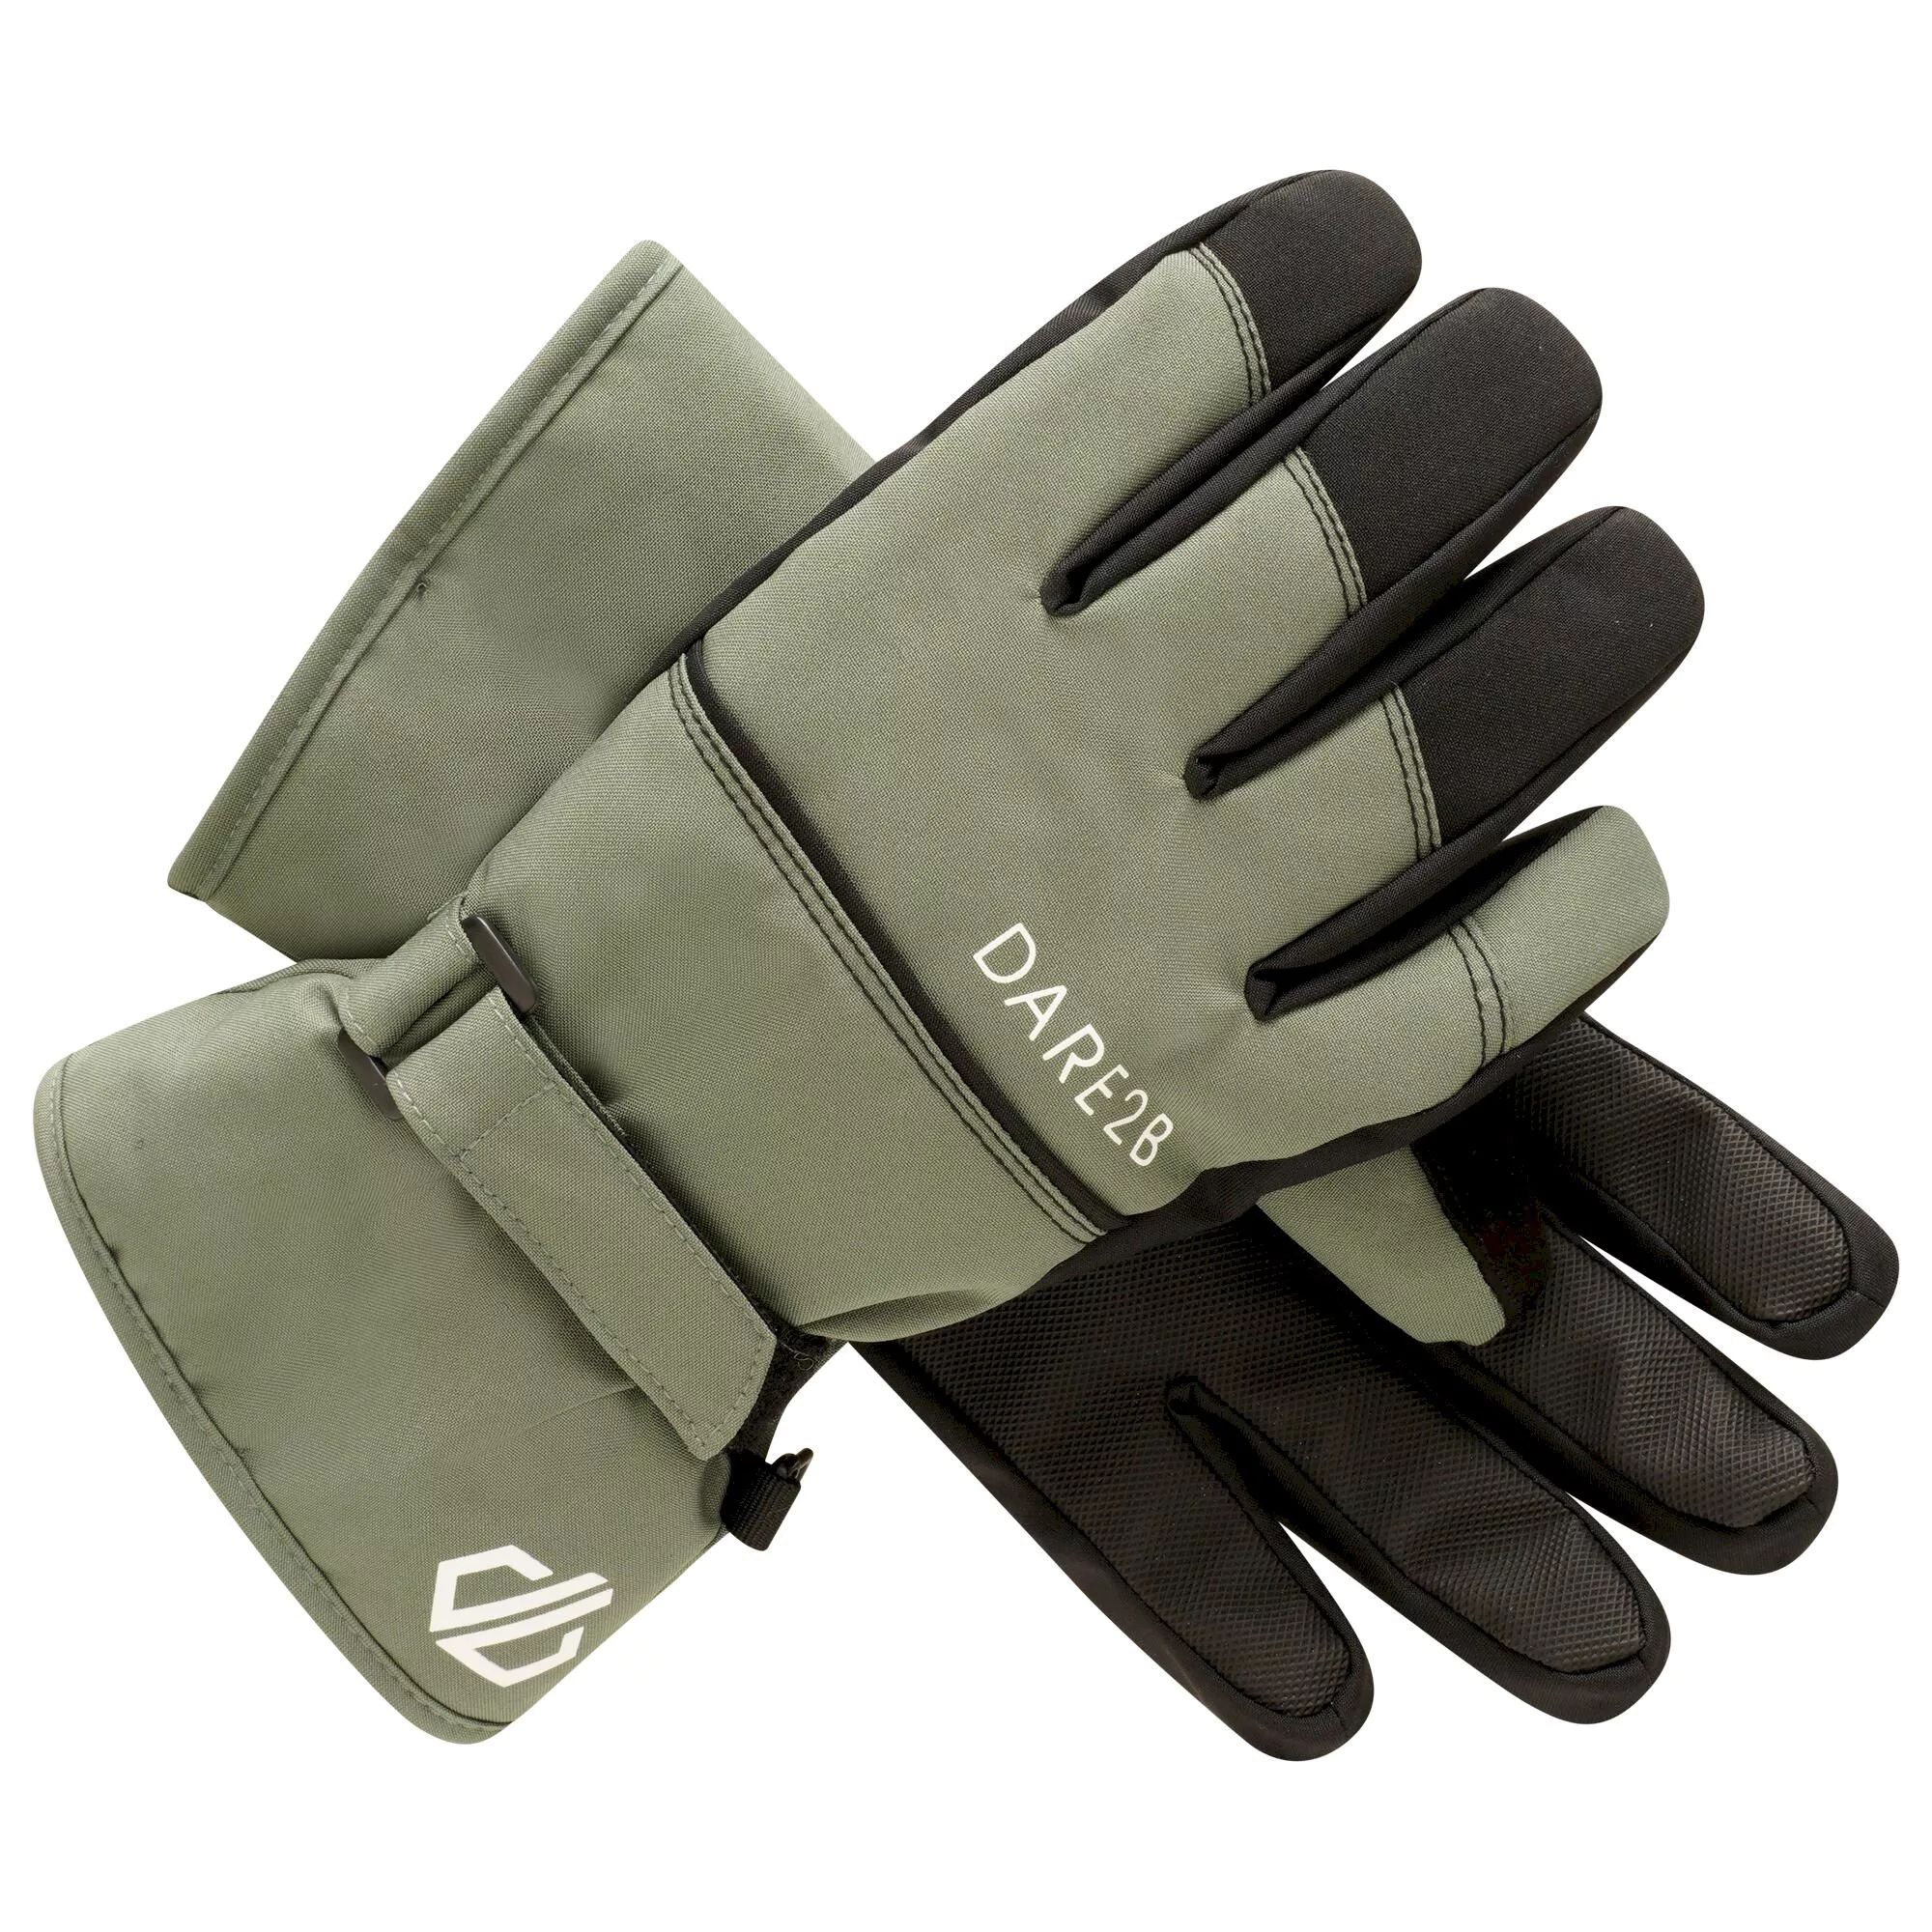 Ski & Snow Gloves -  dare 2b Restart Ski Gloves